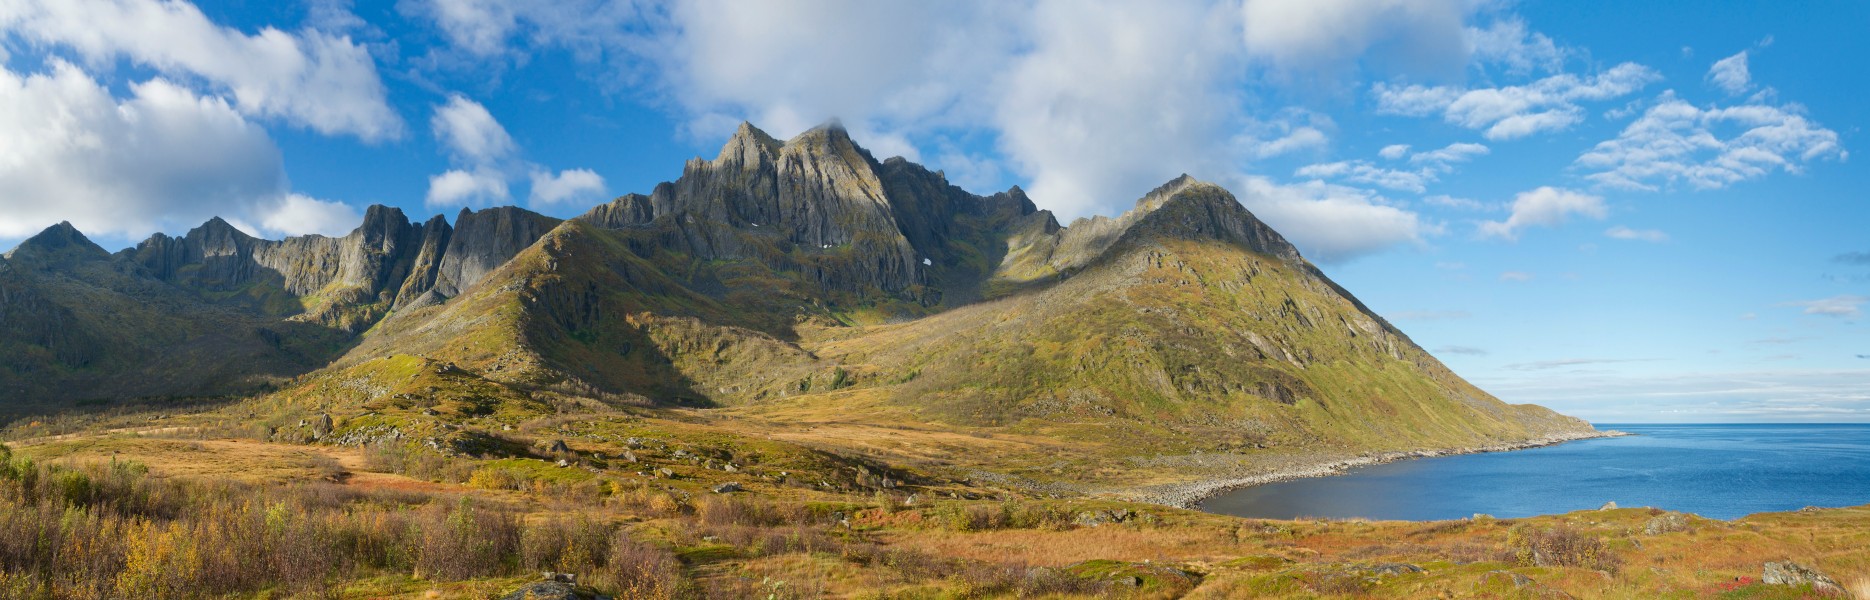 Mountain massif of Fjølhaugen at Knutevika in Senja, Troms, Norway, 2015 September